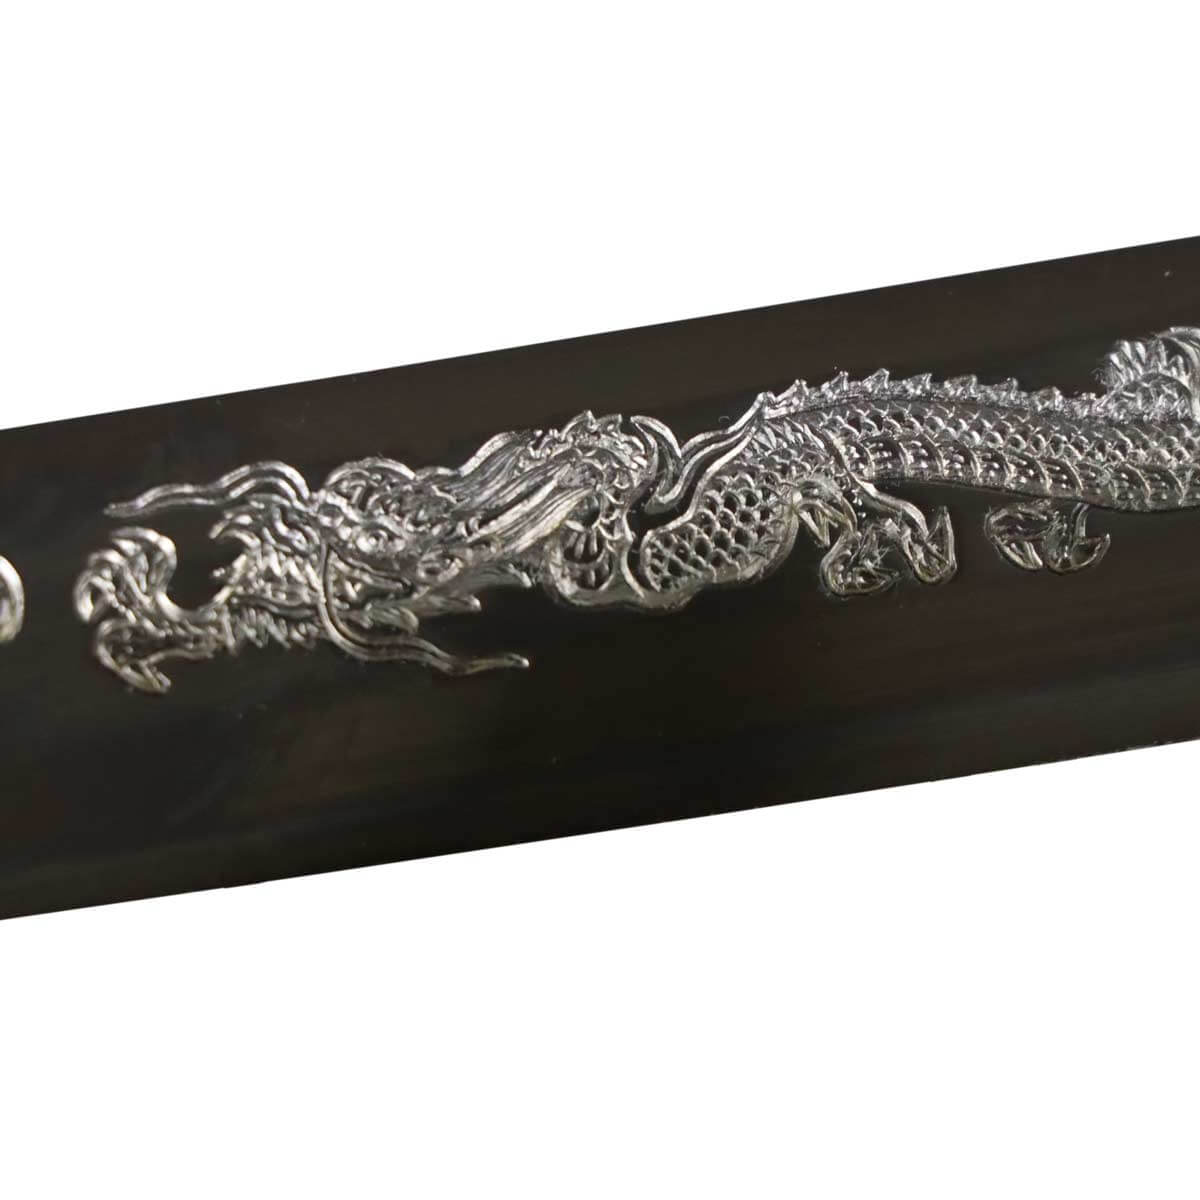 Tenryu Katana Klinge mit eingraviertem Drache von Toshiro Swords